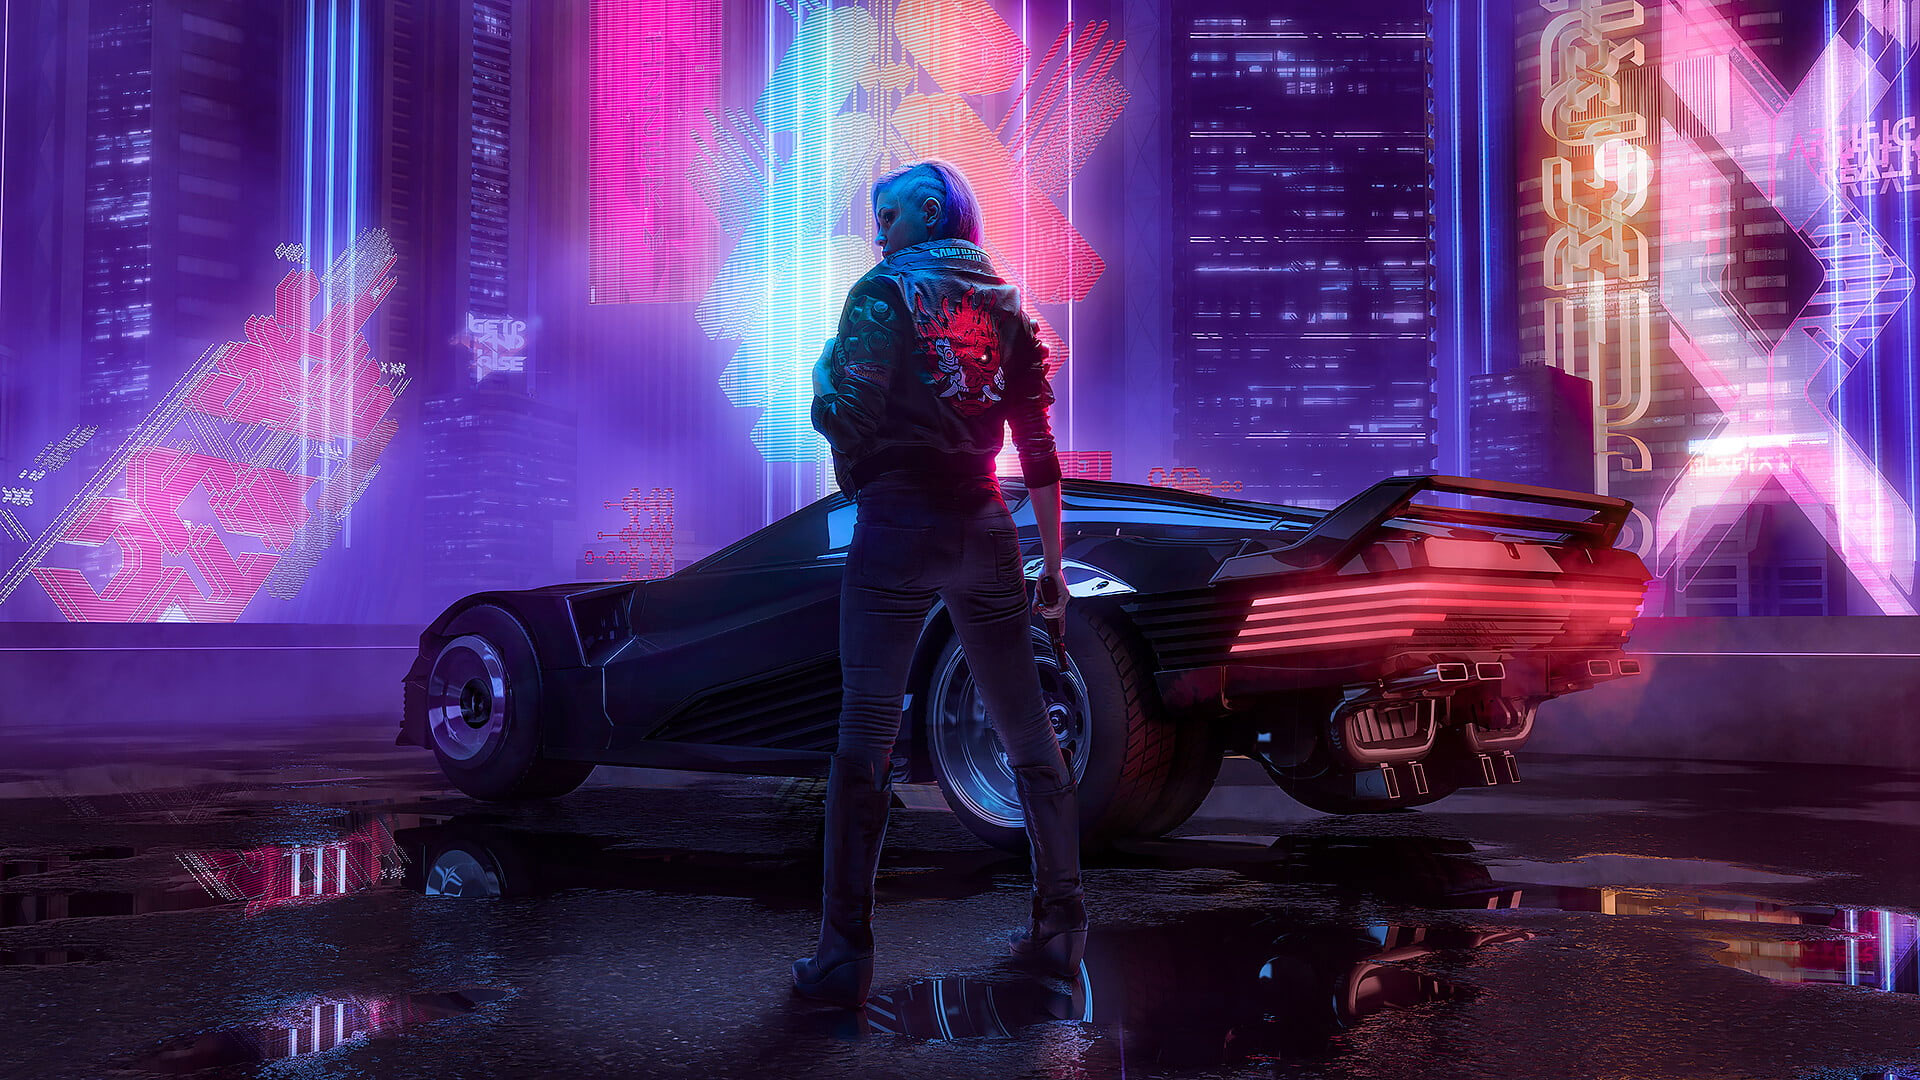 Octokuro wallpaper, Cyber, cyberpunk, Cyberpunk 2077, car, futuristic, jacket